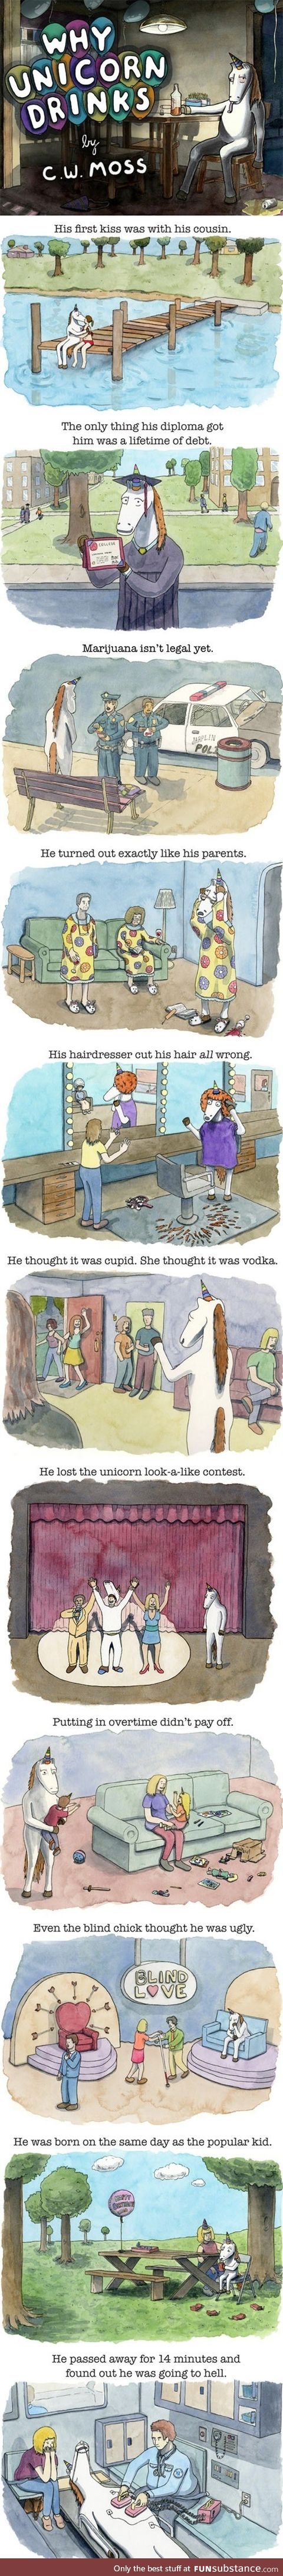 "why unicorn drinks"